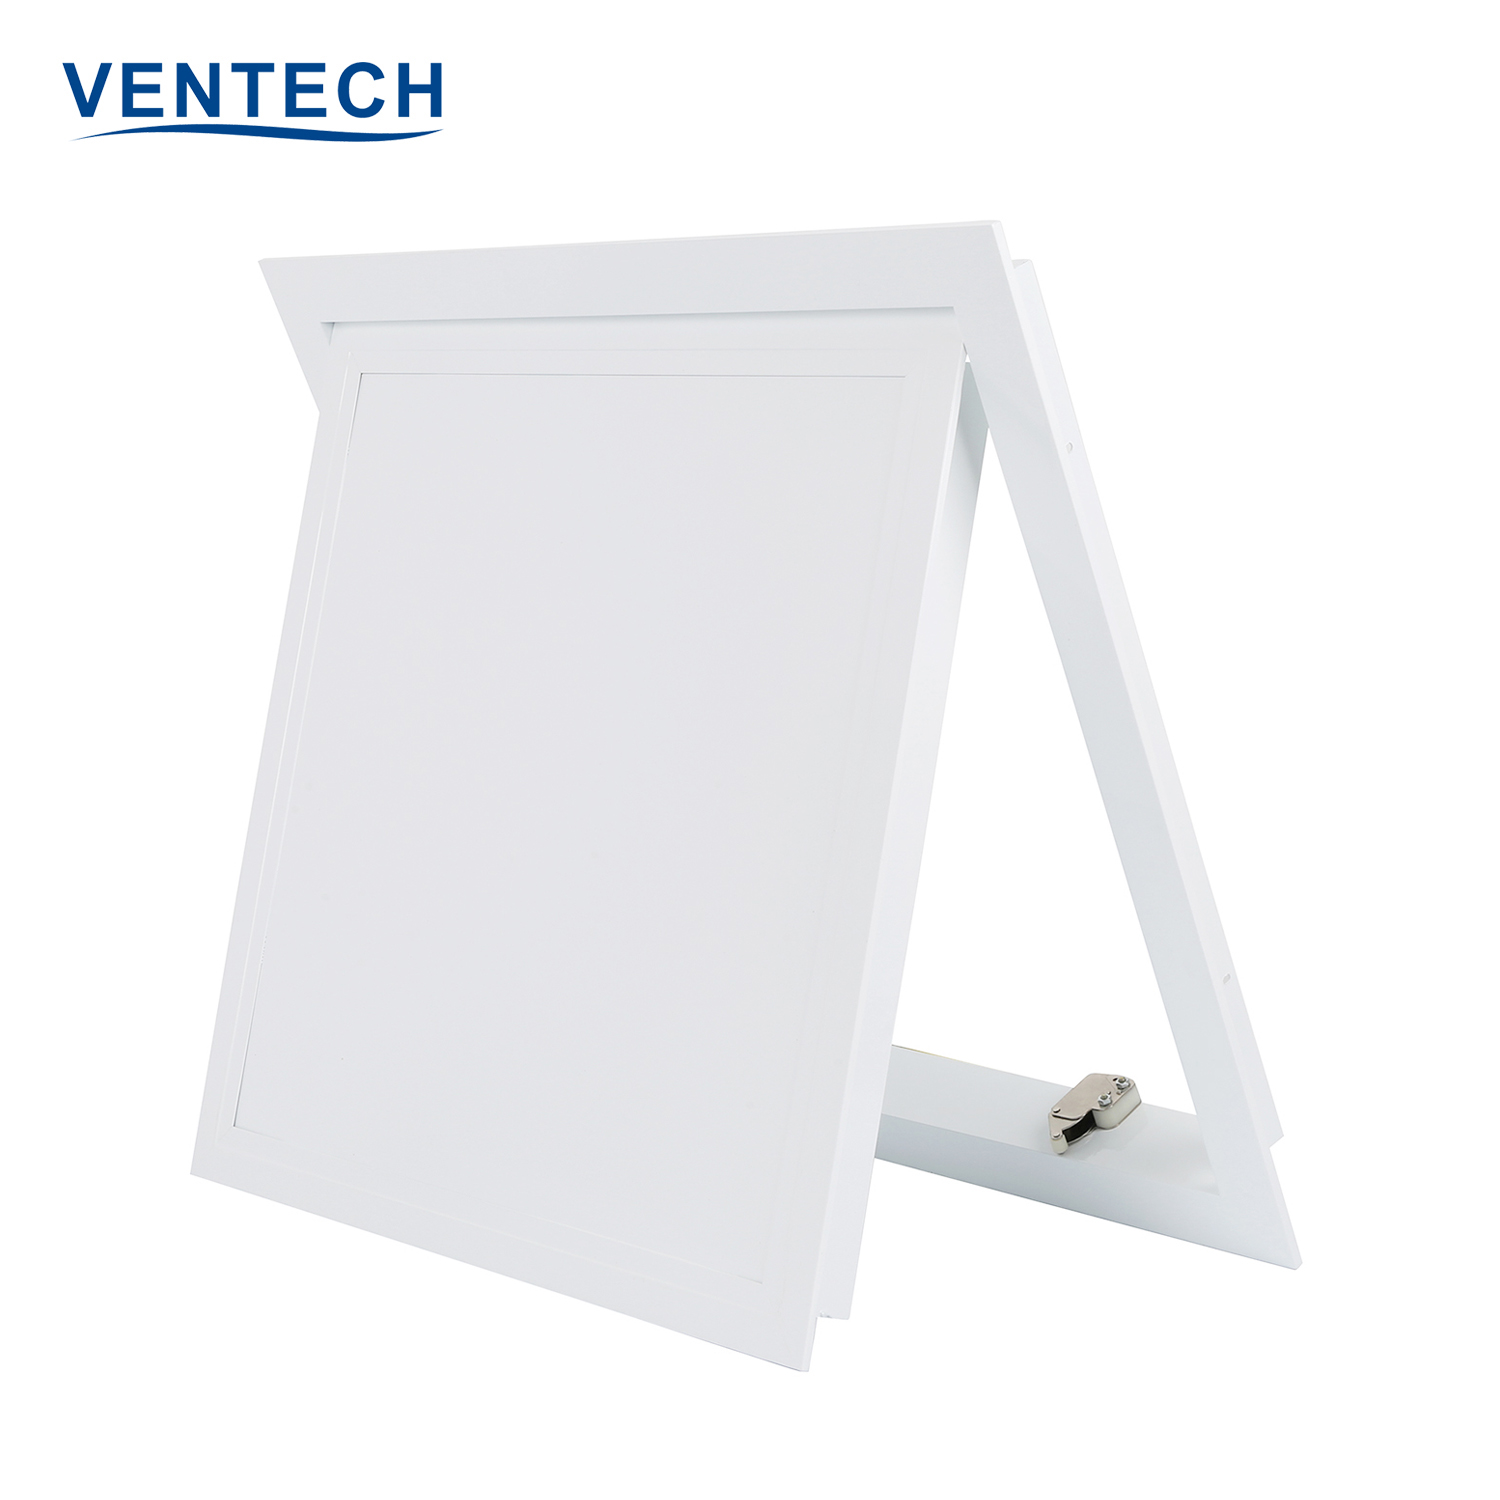 Ventech hvac access doors directly sale for long corridors-2